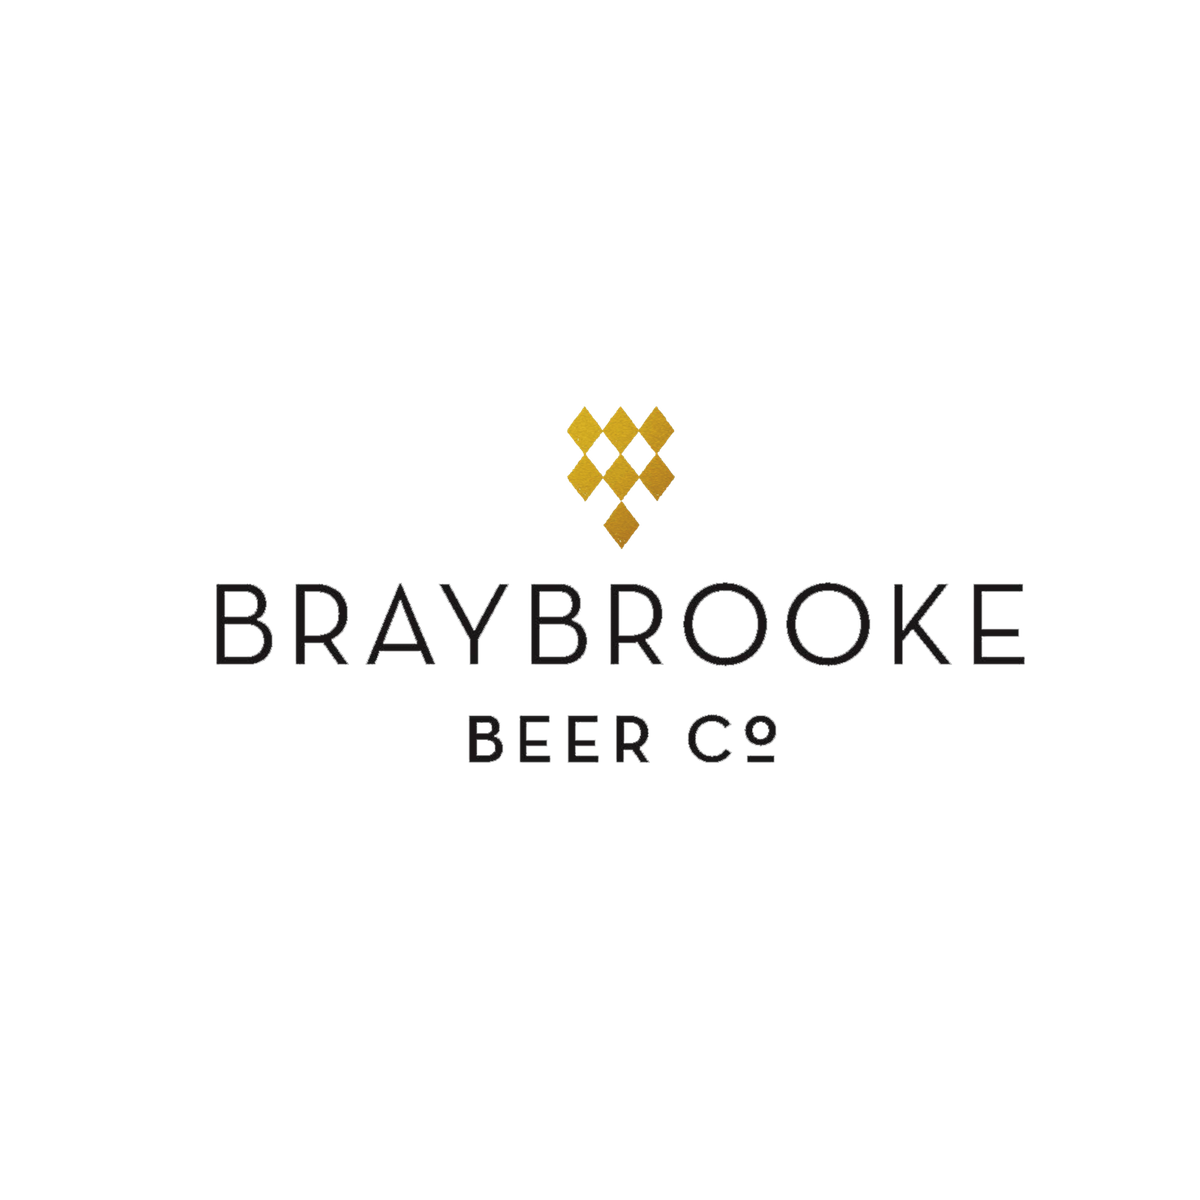 Braybrooke Beer Co brand logo